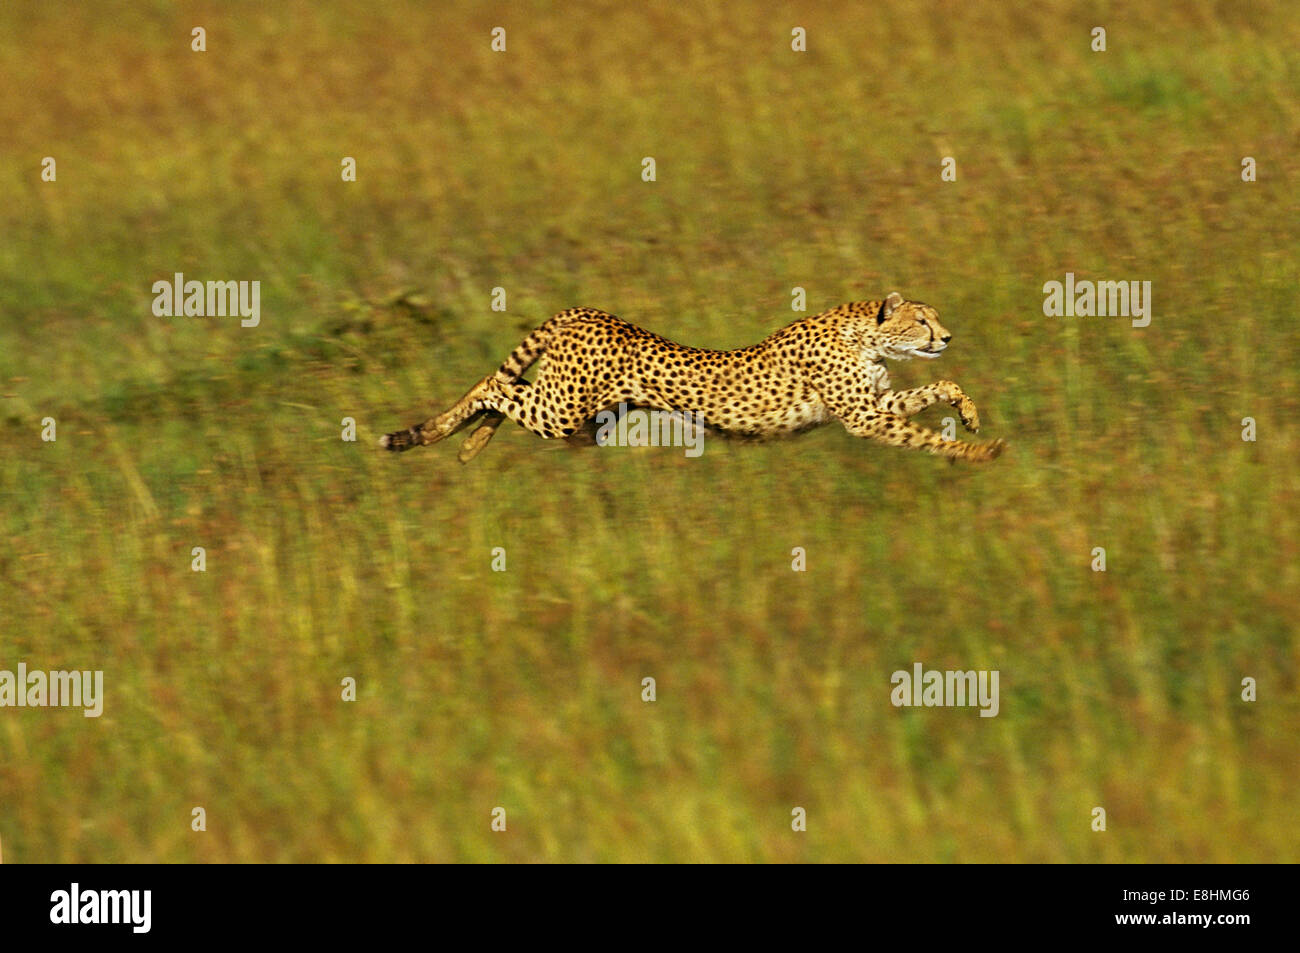 Cheetah jumping running animal hi-res stock photography and images - Alamy